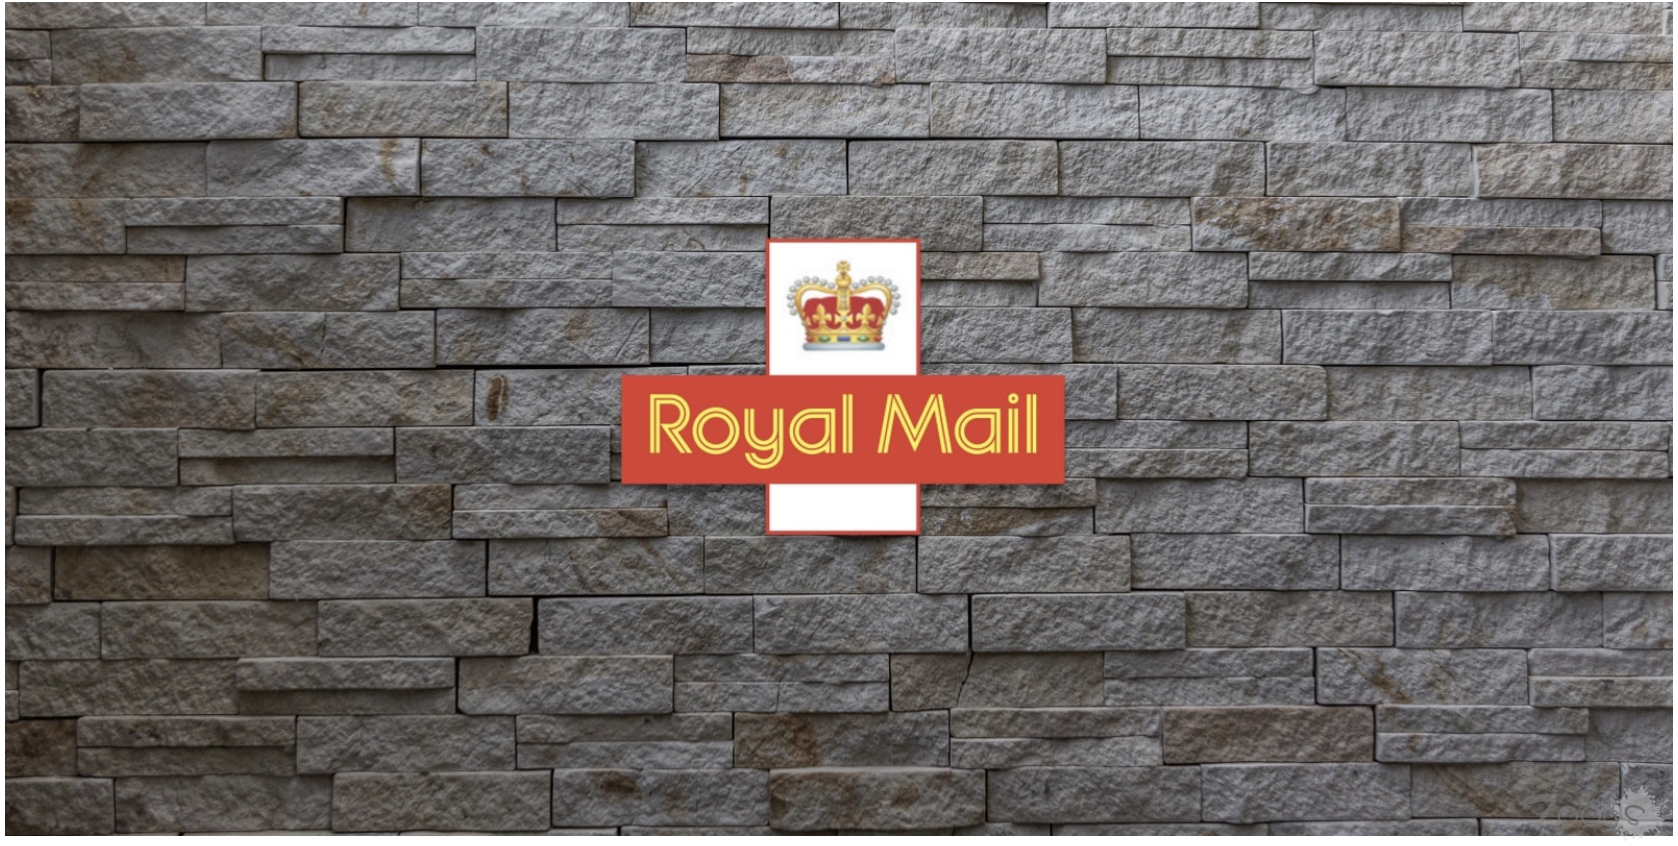 LockBit 勒索软件操作相关的皇家邮政网络攻击